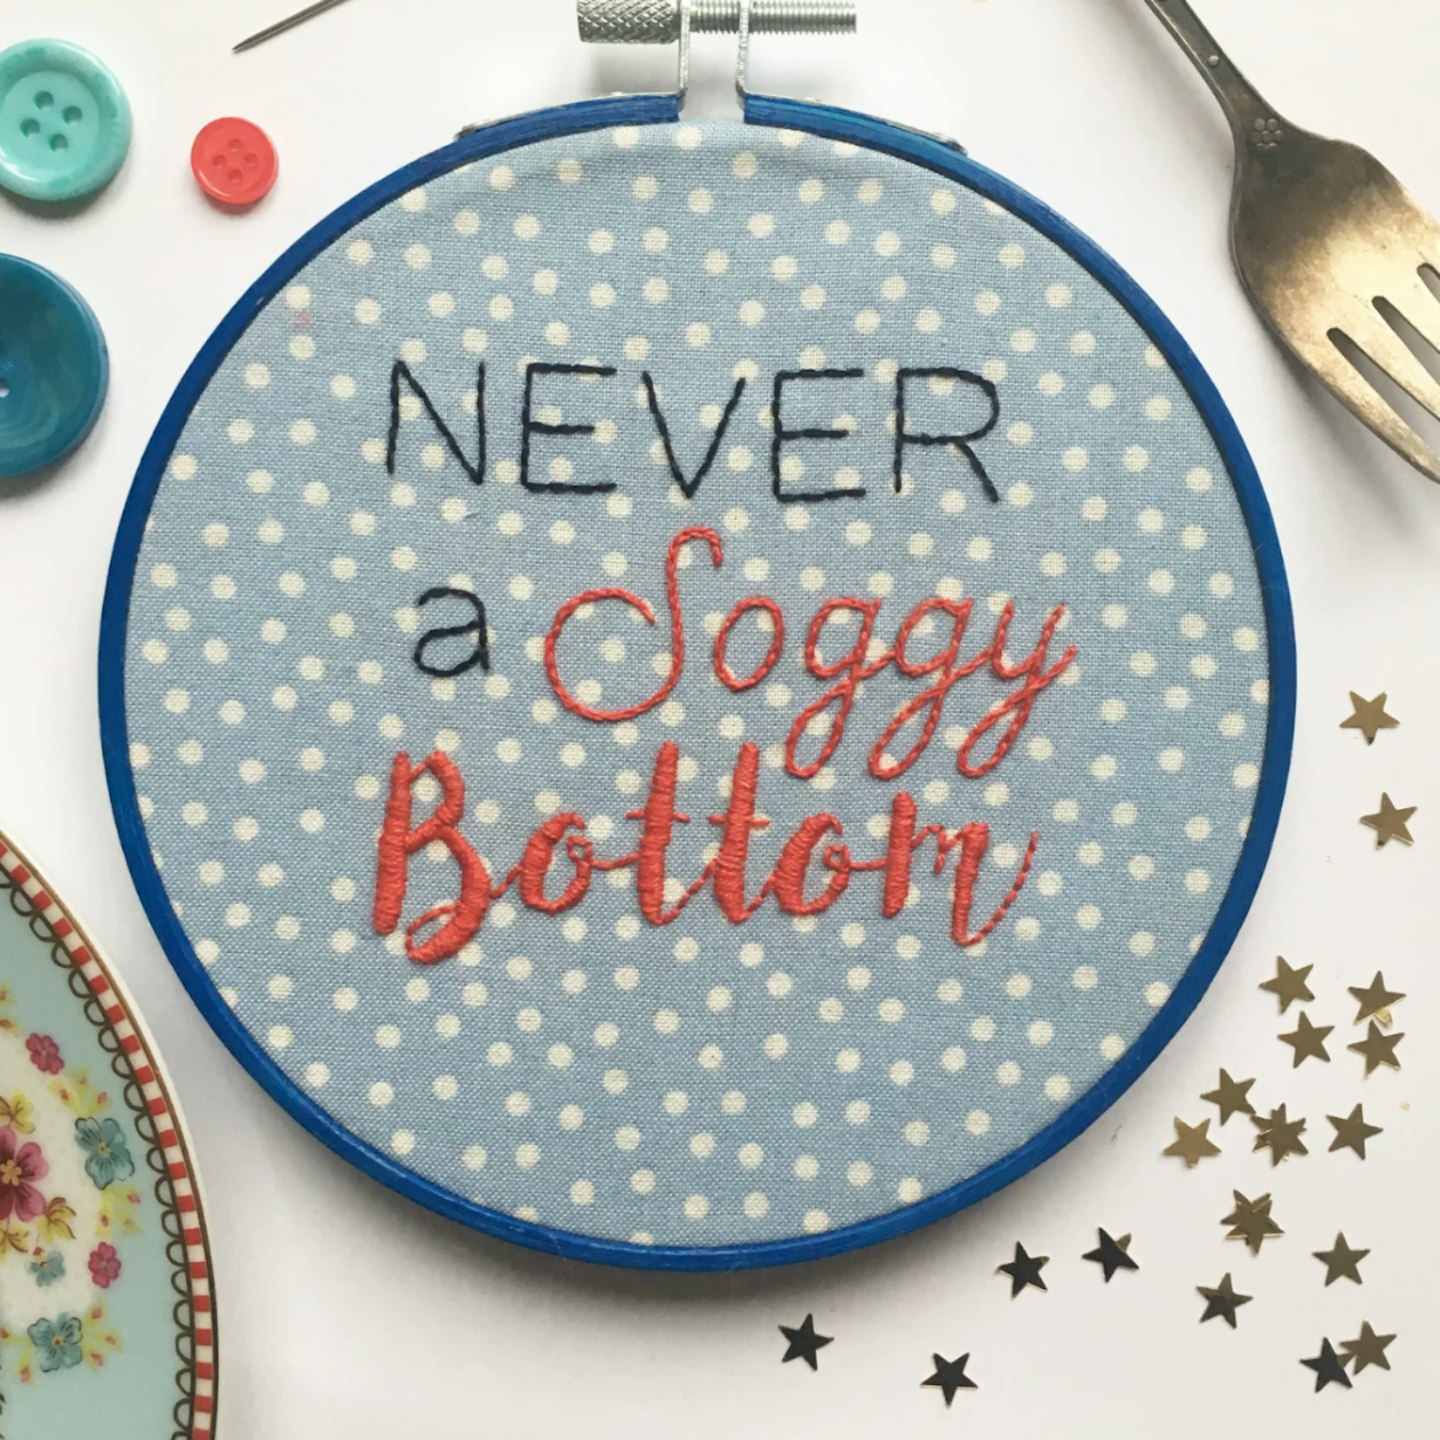 Soggy Bottom Bake Off inspired embroidery hoop art